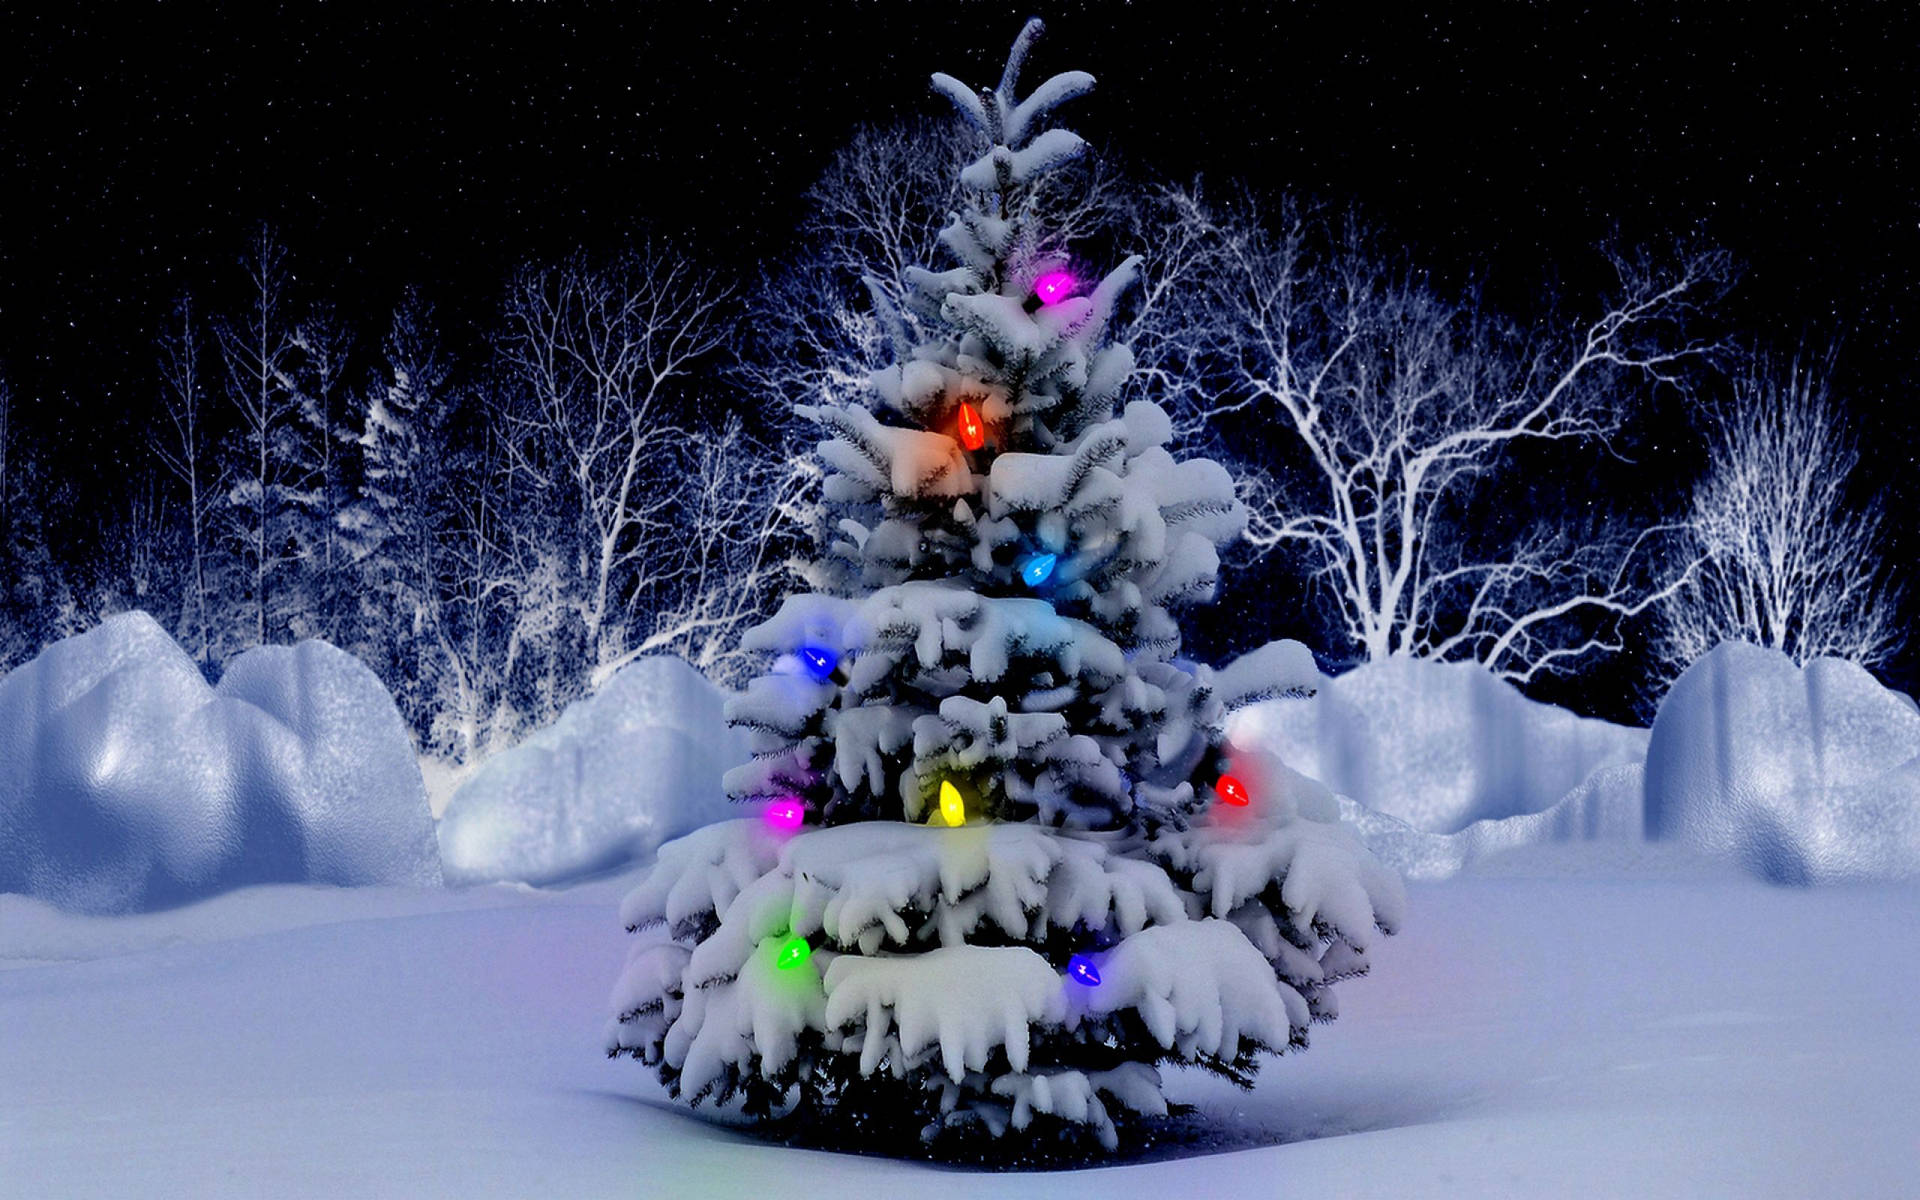 Snowey Christmas Trees Wallpapers